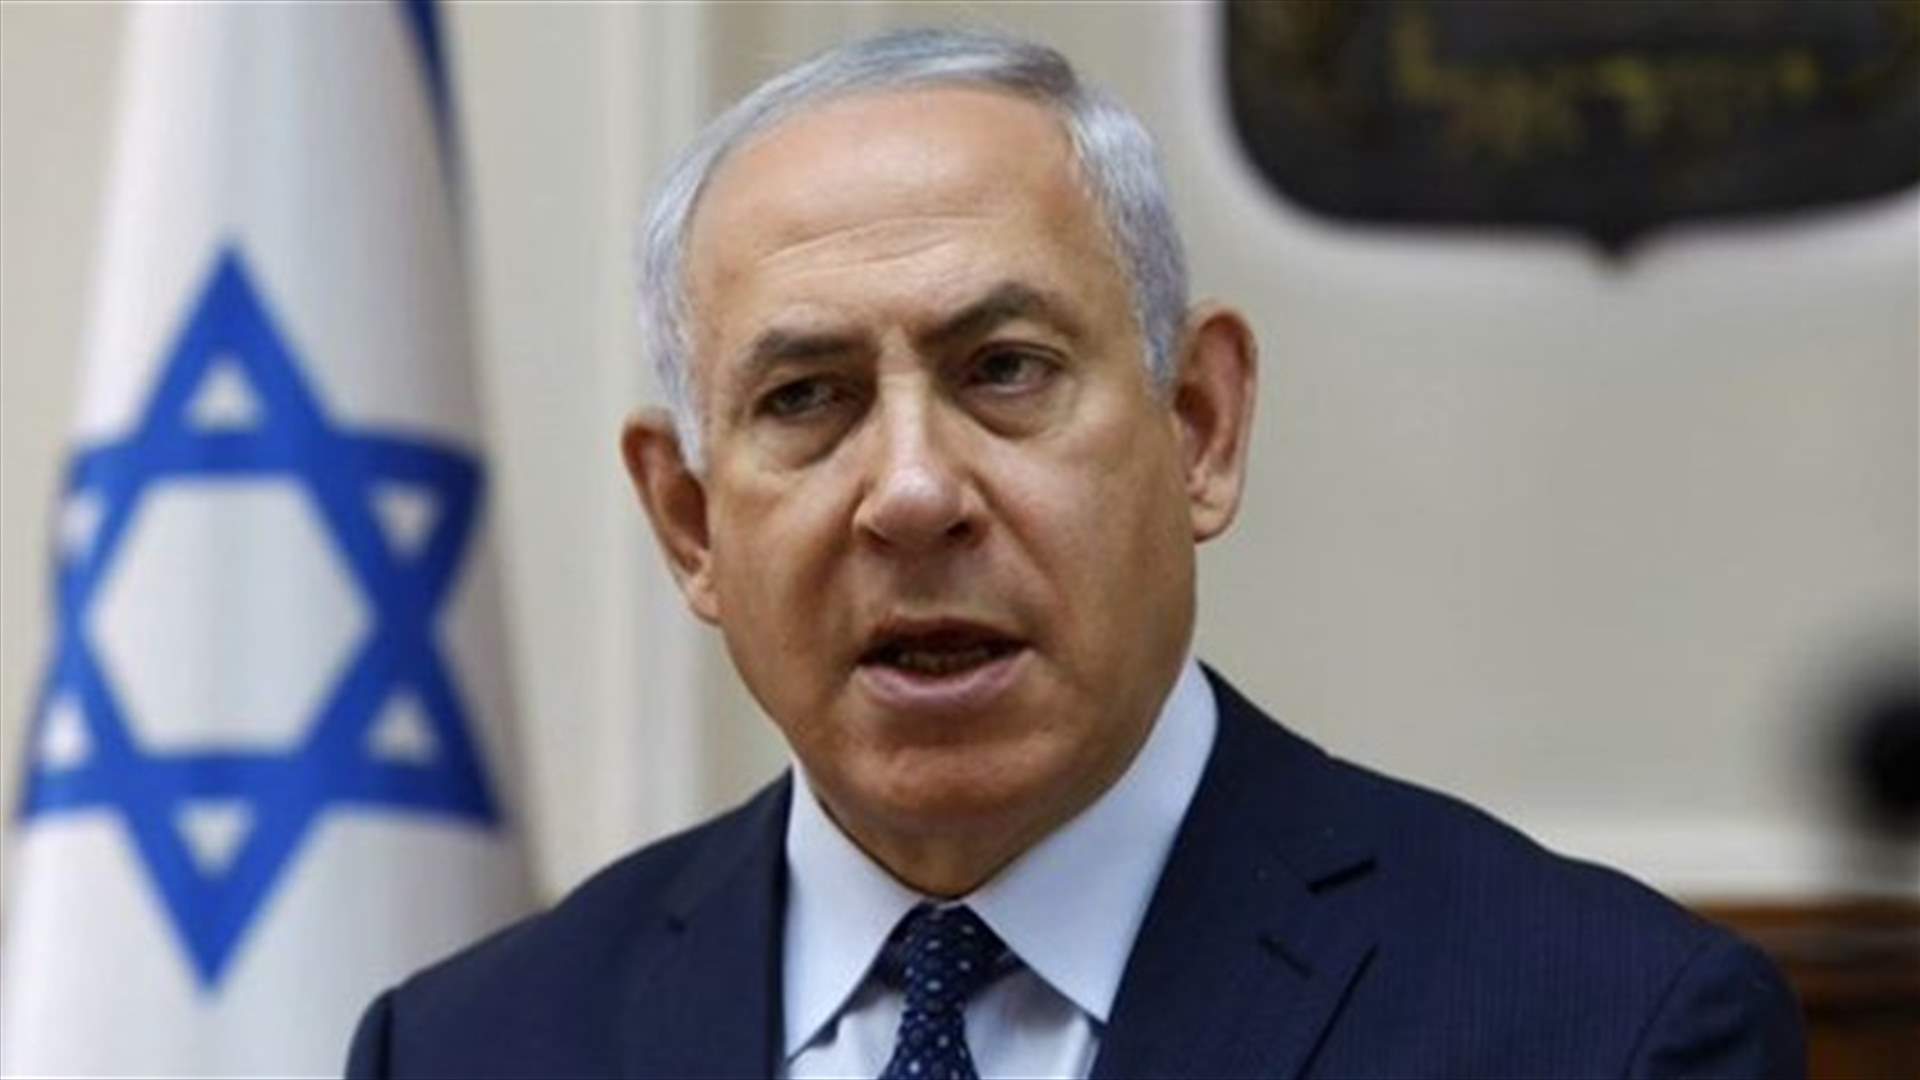 Israel says EU&#39;s response on Iran recalls Nazi appeasement